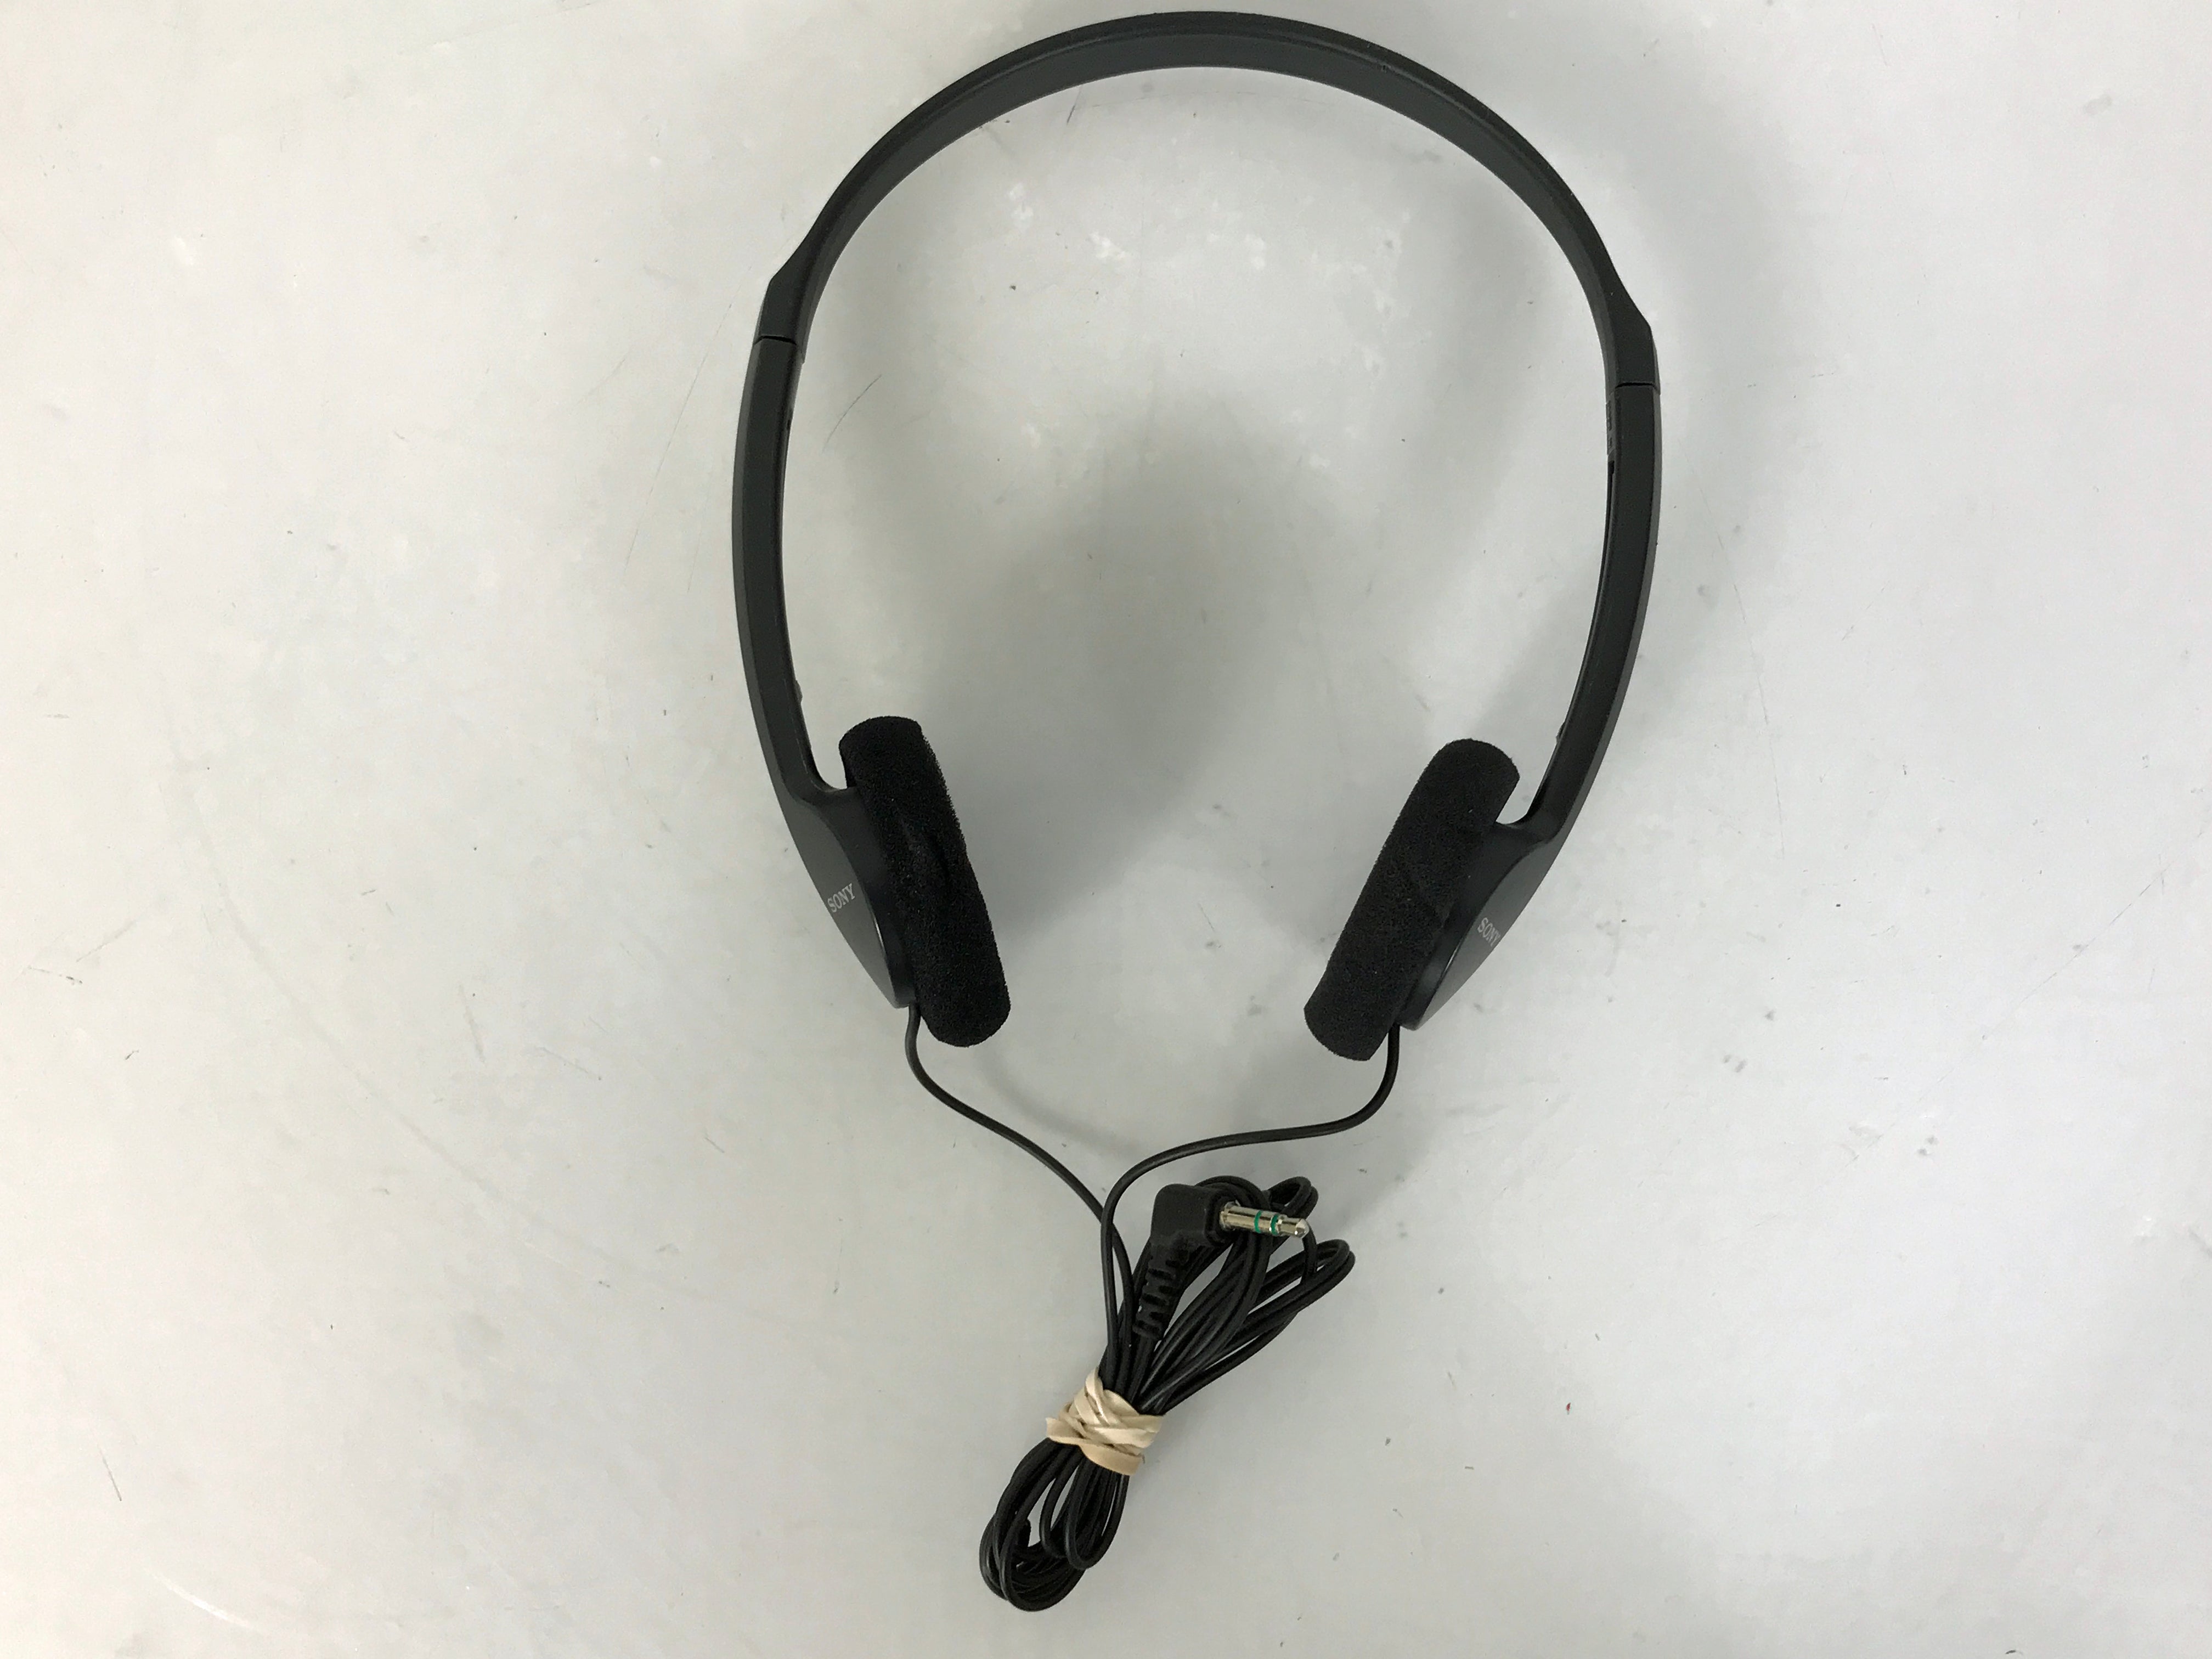 Sony MDR-110 On-Ear Stereo Headphones